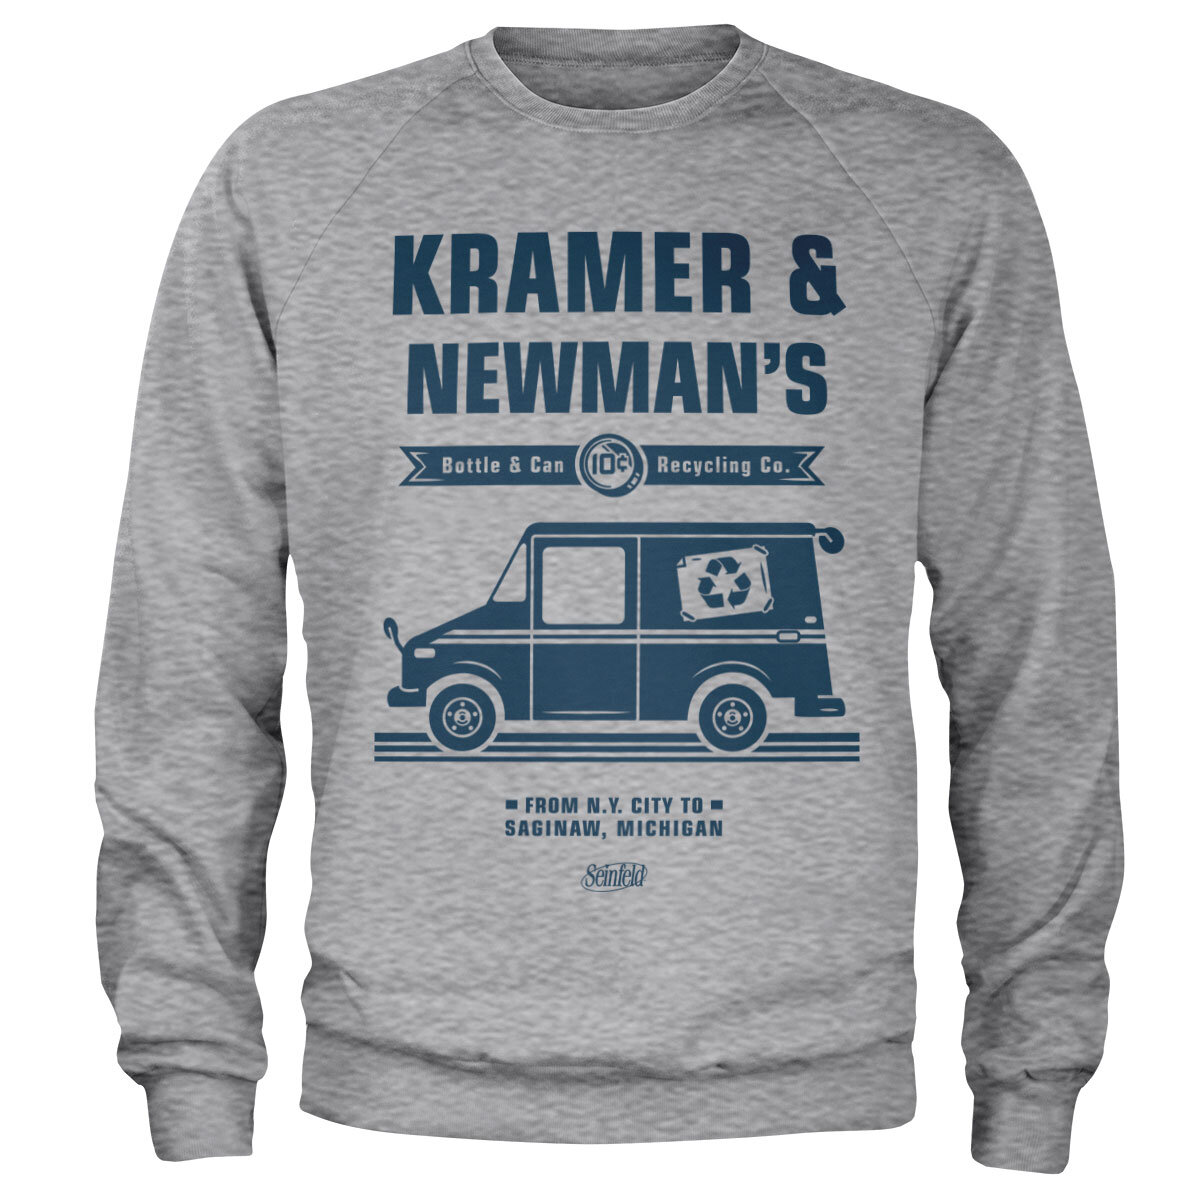 Kramer & Newman's Recycling Co Sweatshirt